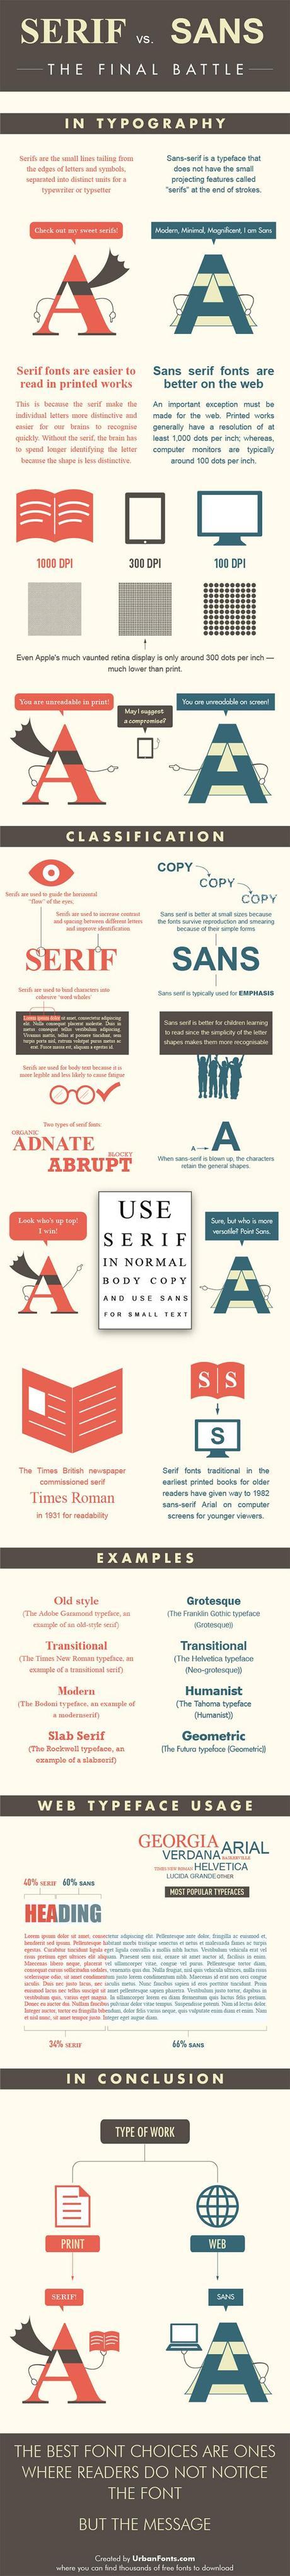 Serif-vs-Sans